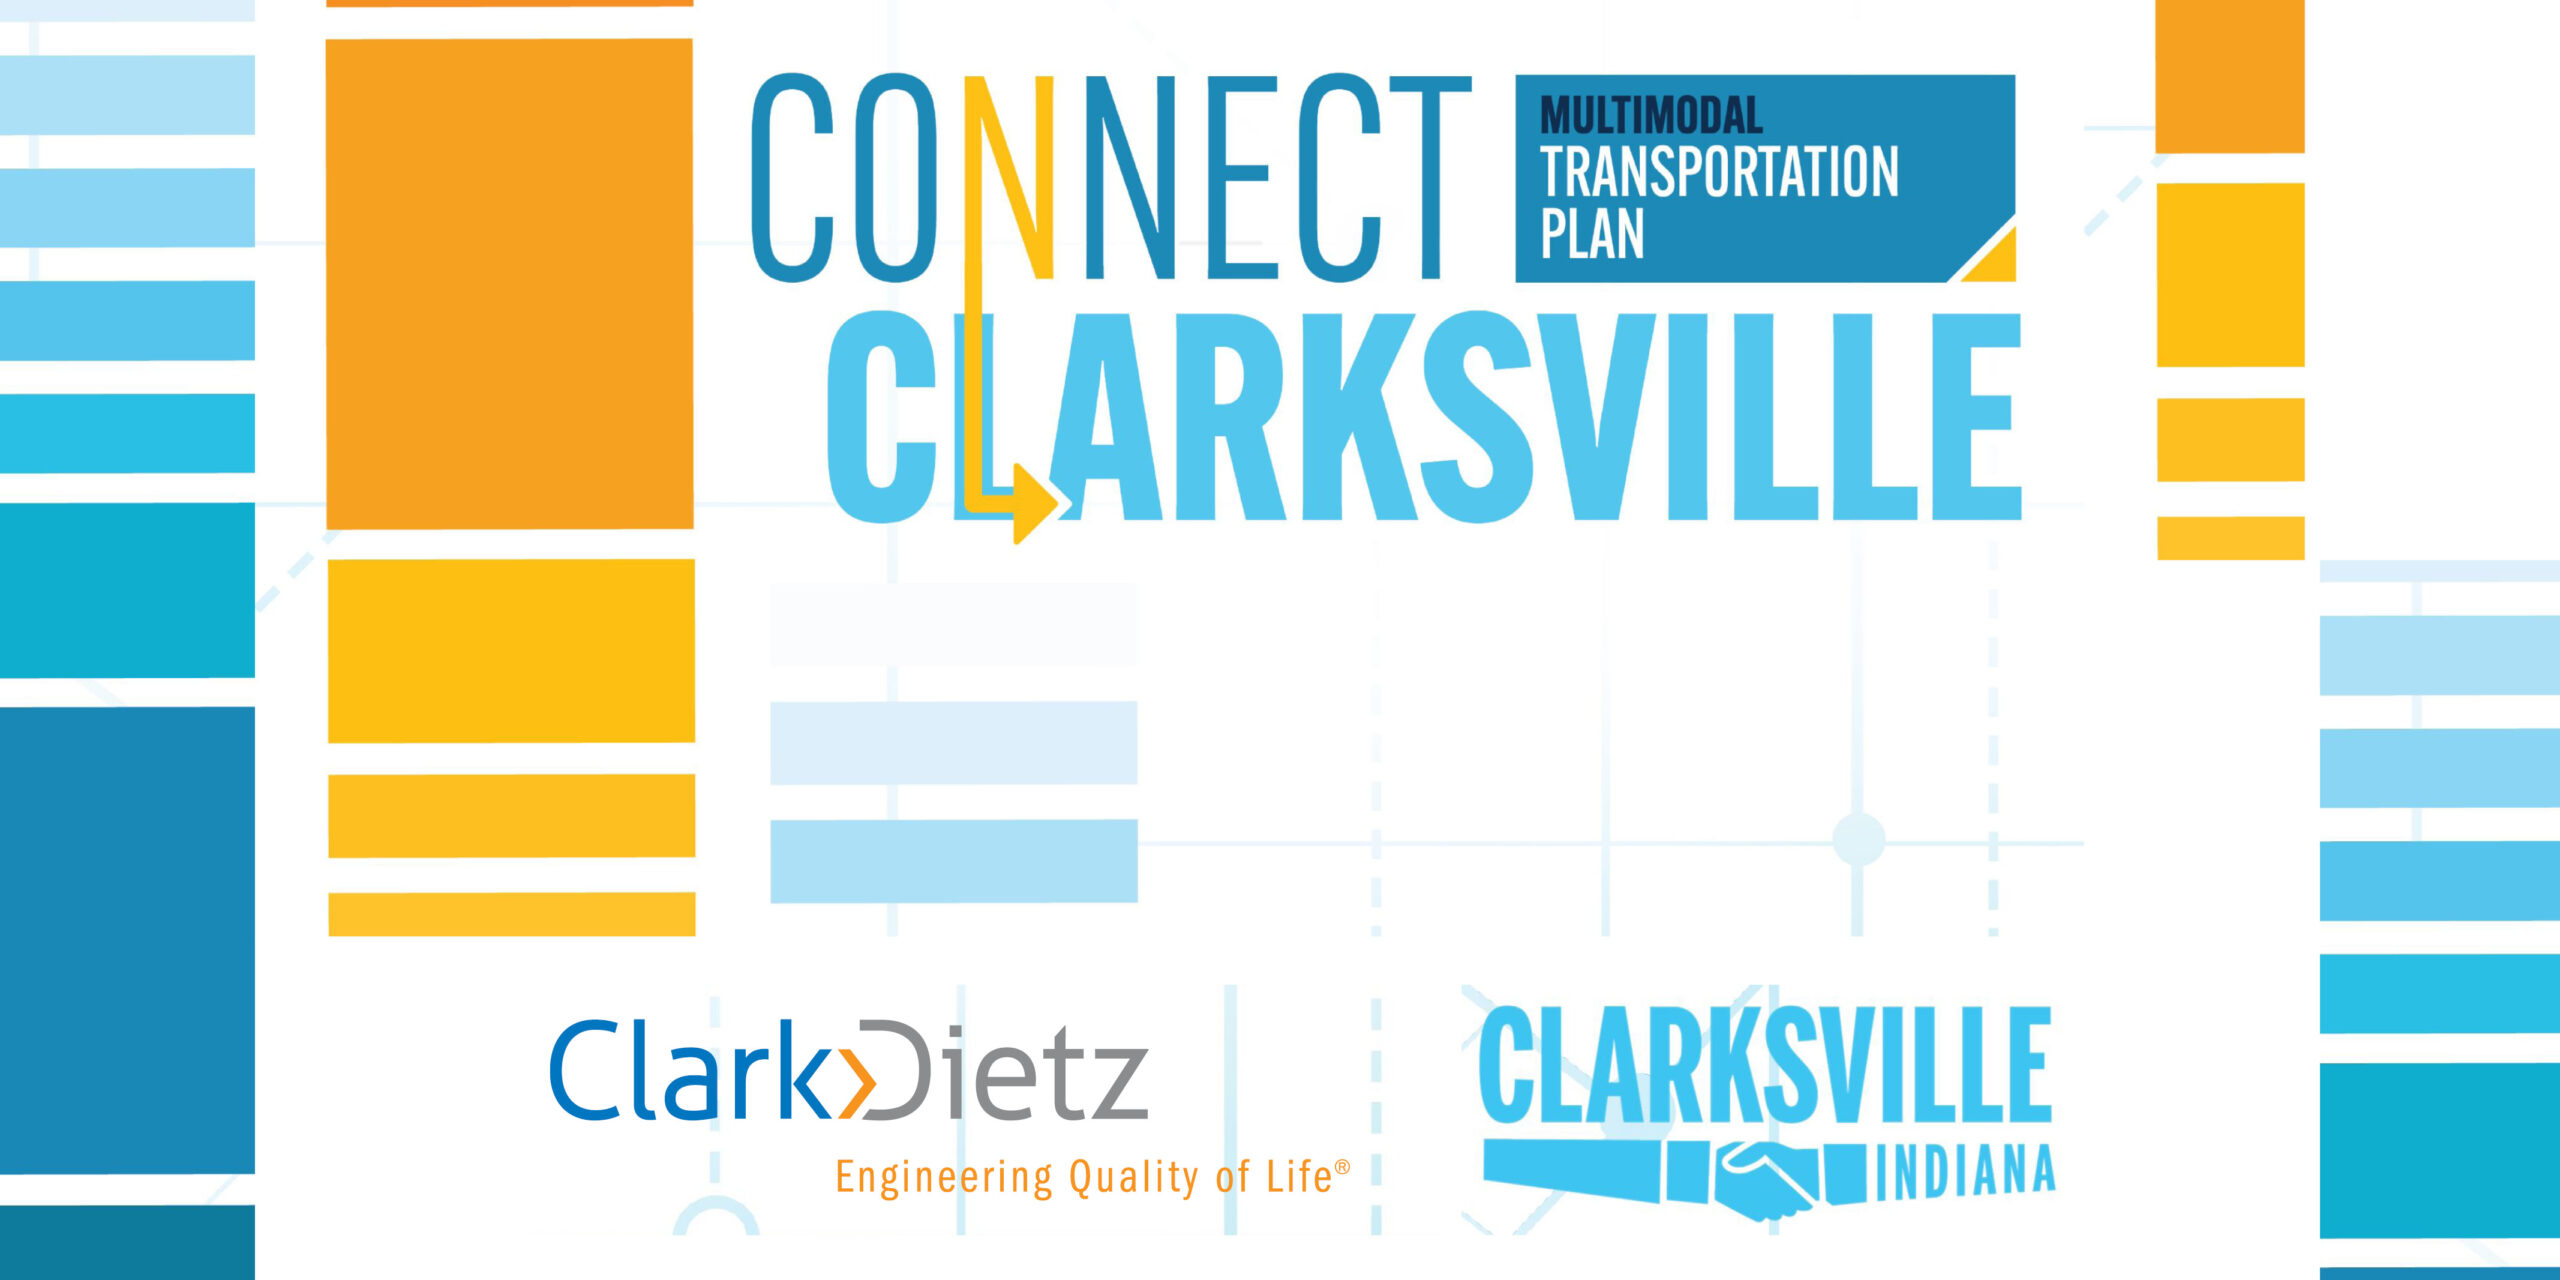 connect clarksville multimodal transportation plan